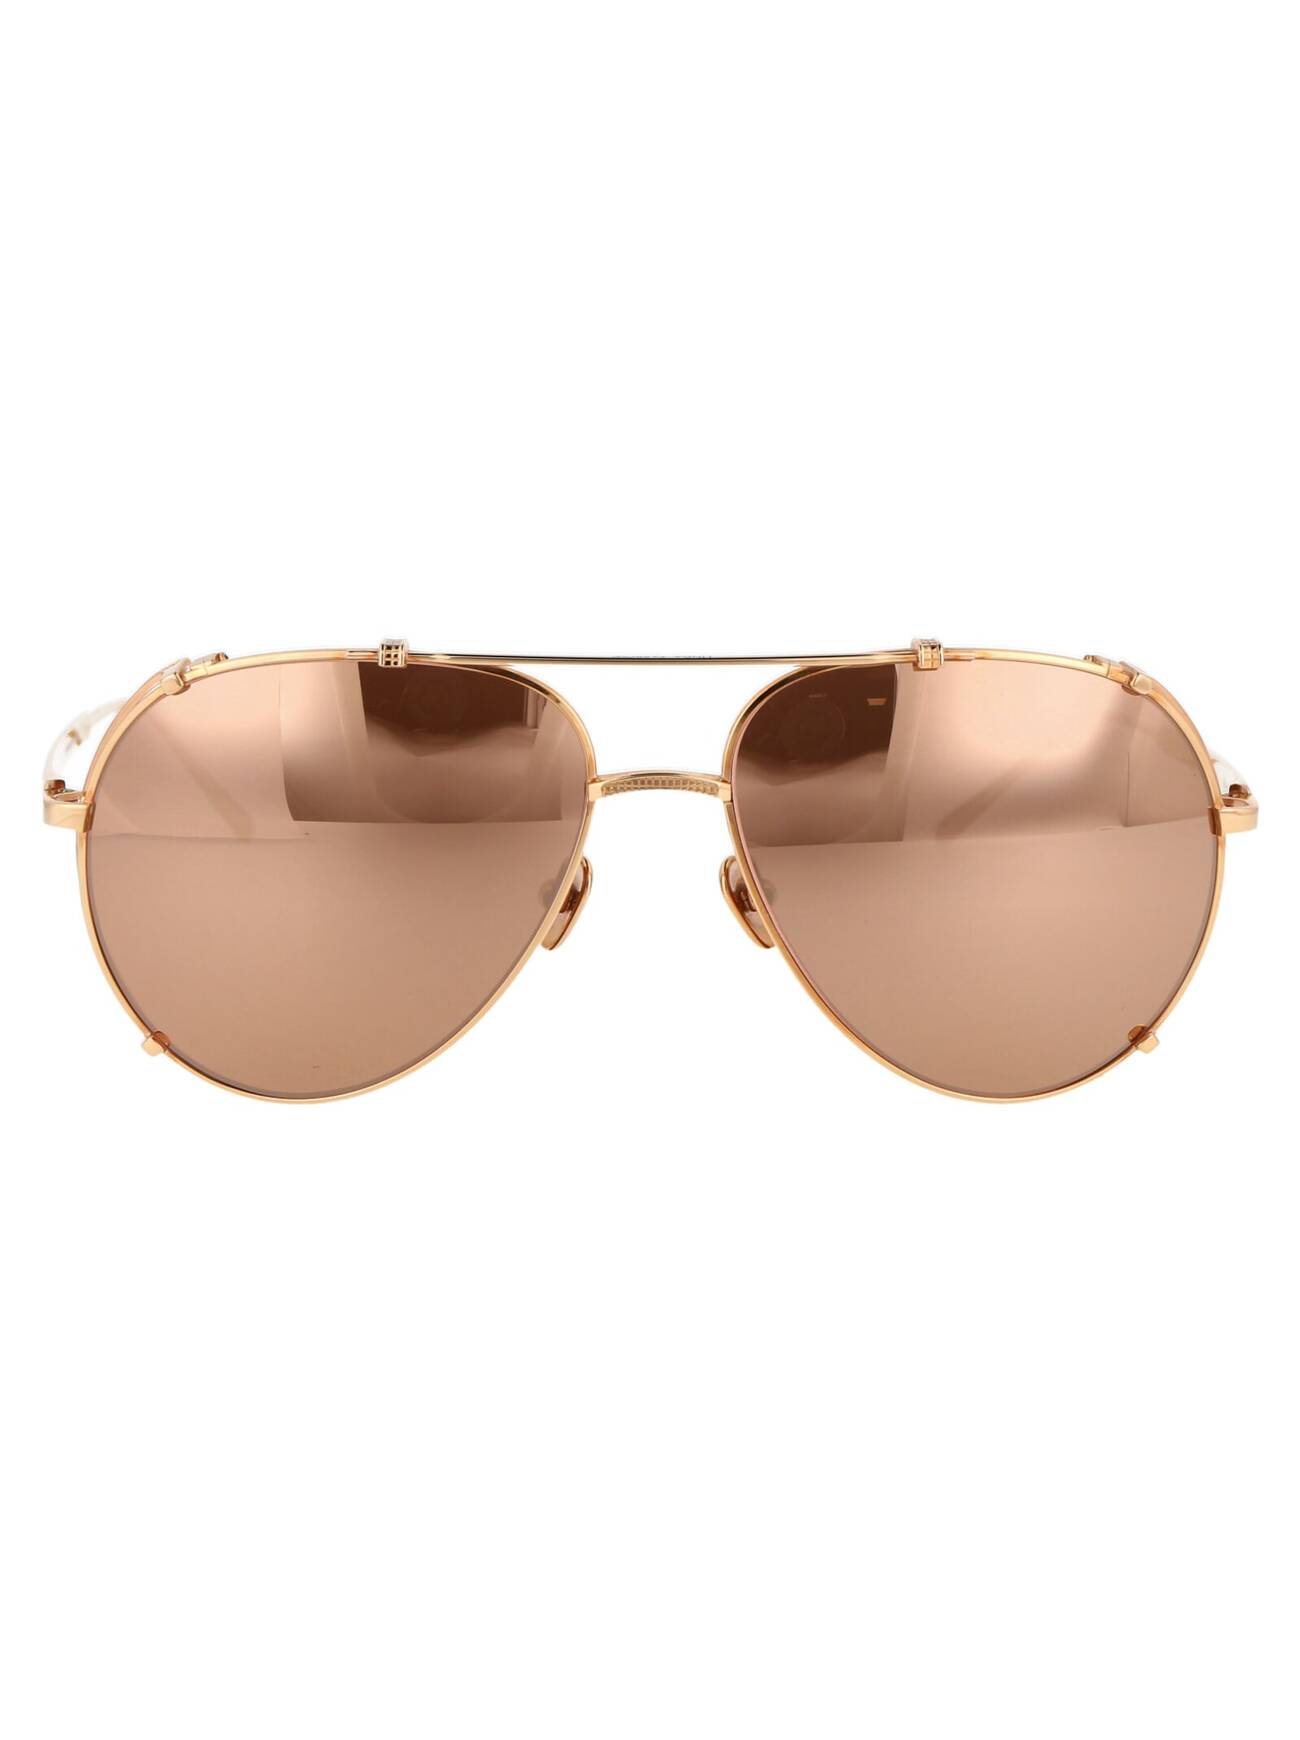 Linda Farrow Newman Sunglasses in gold / rose